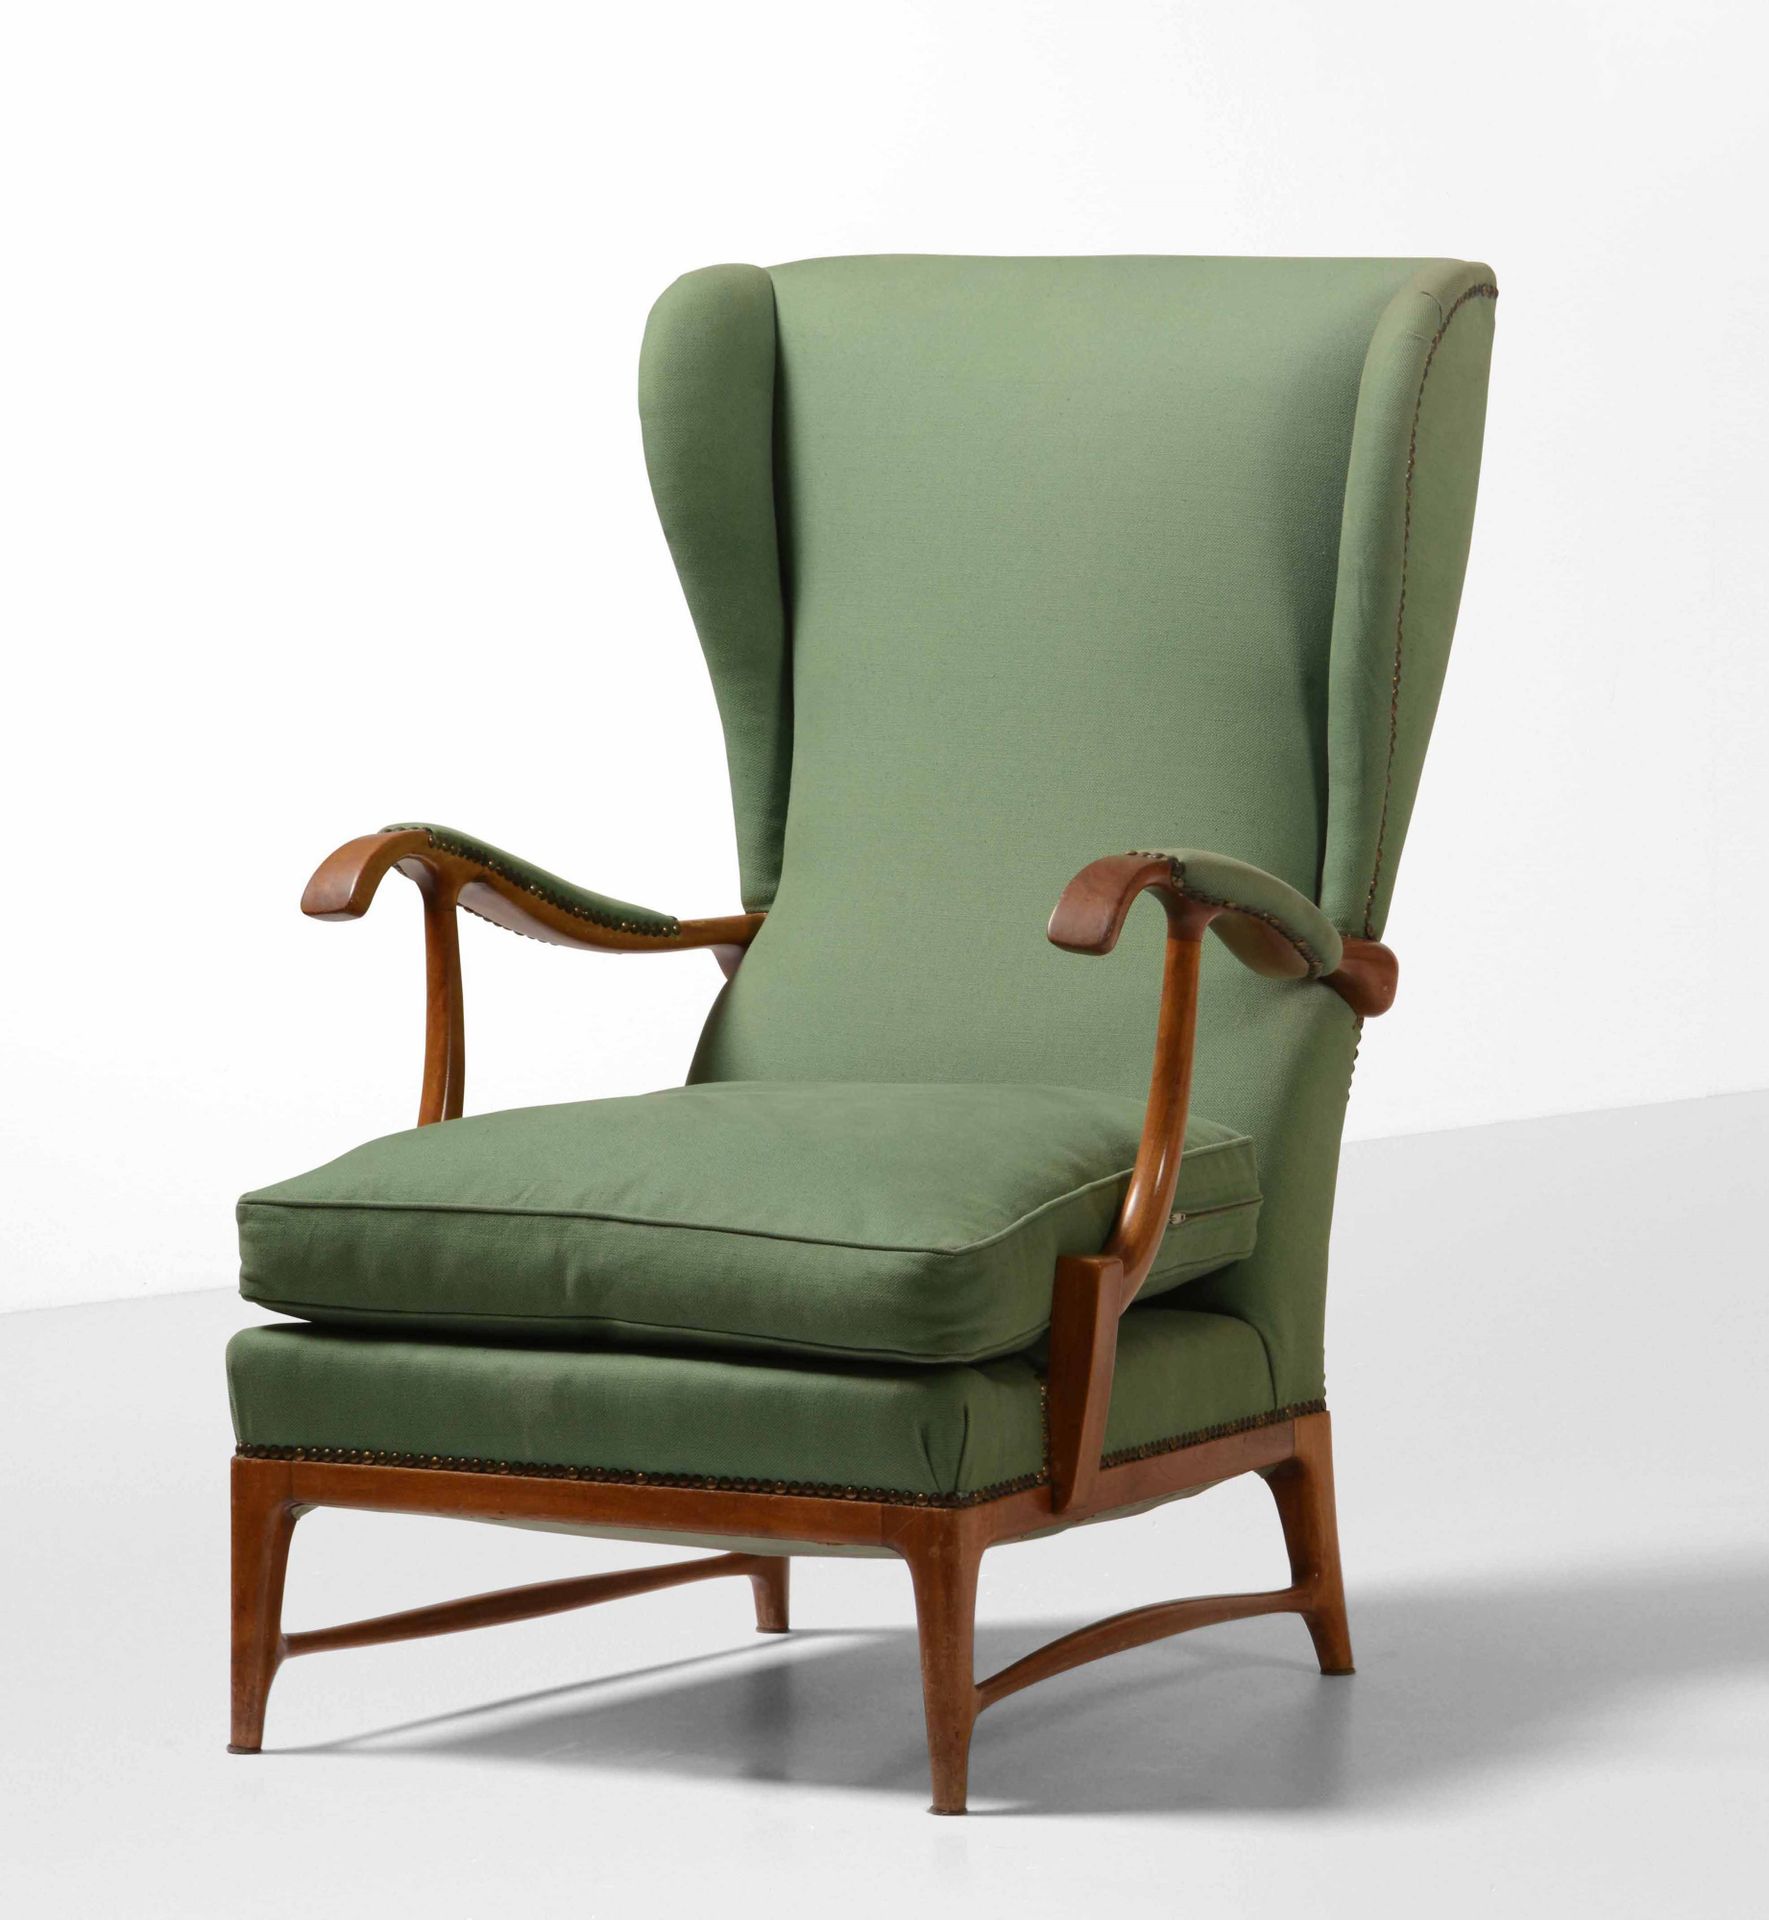 Paolo Buffa, 木质框架和支架的扶手椅，布艺椅套。 意大利制造，约1950年，cm 70x70x100